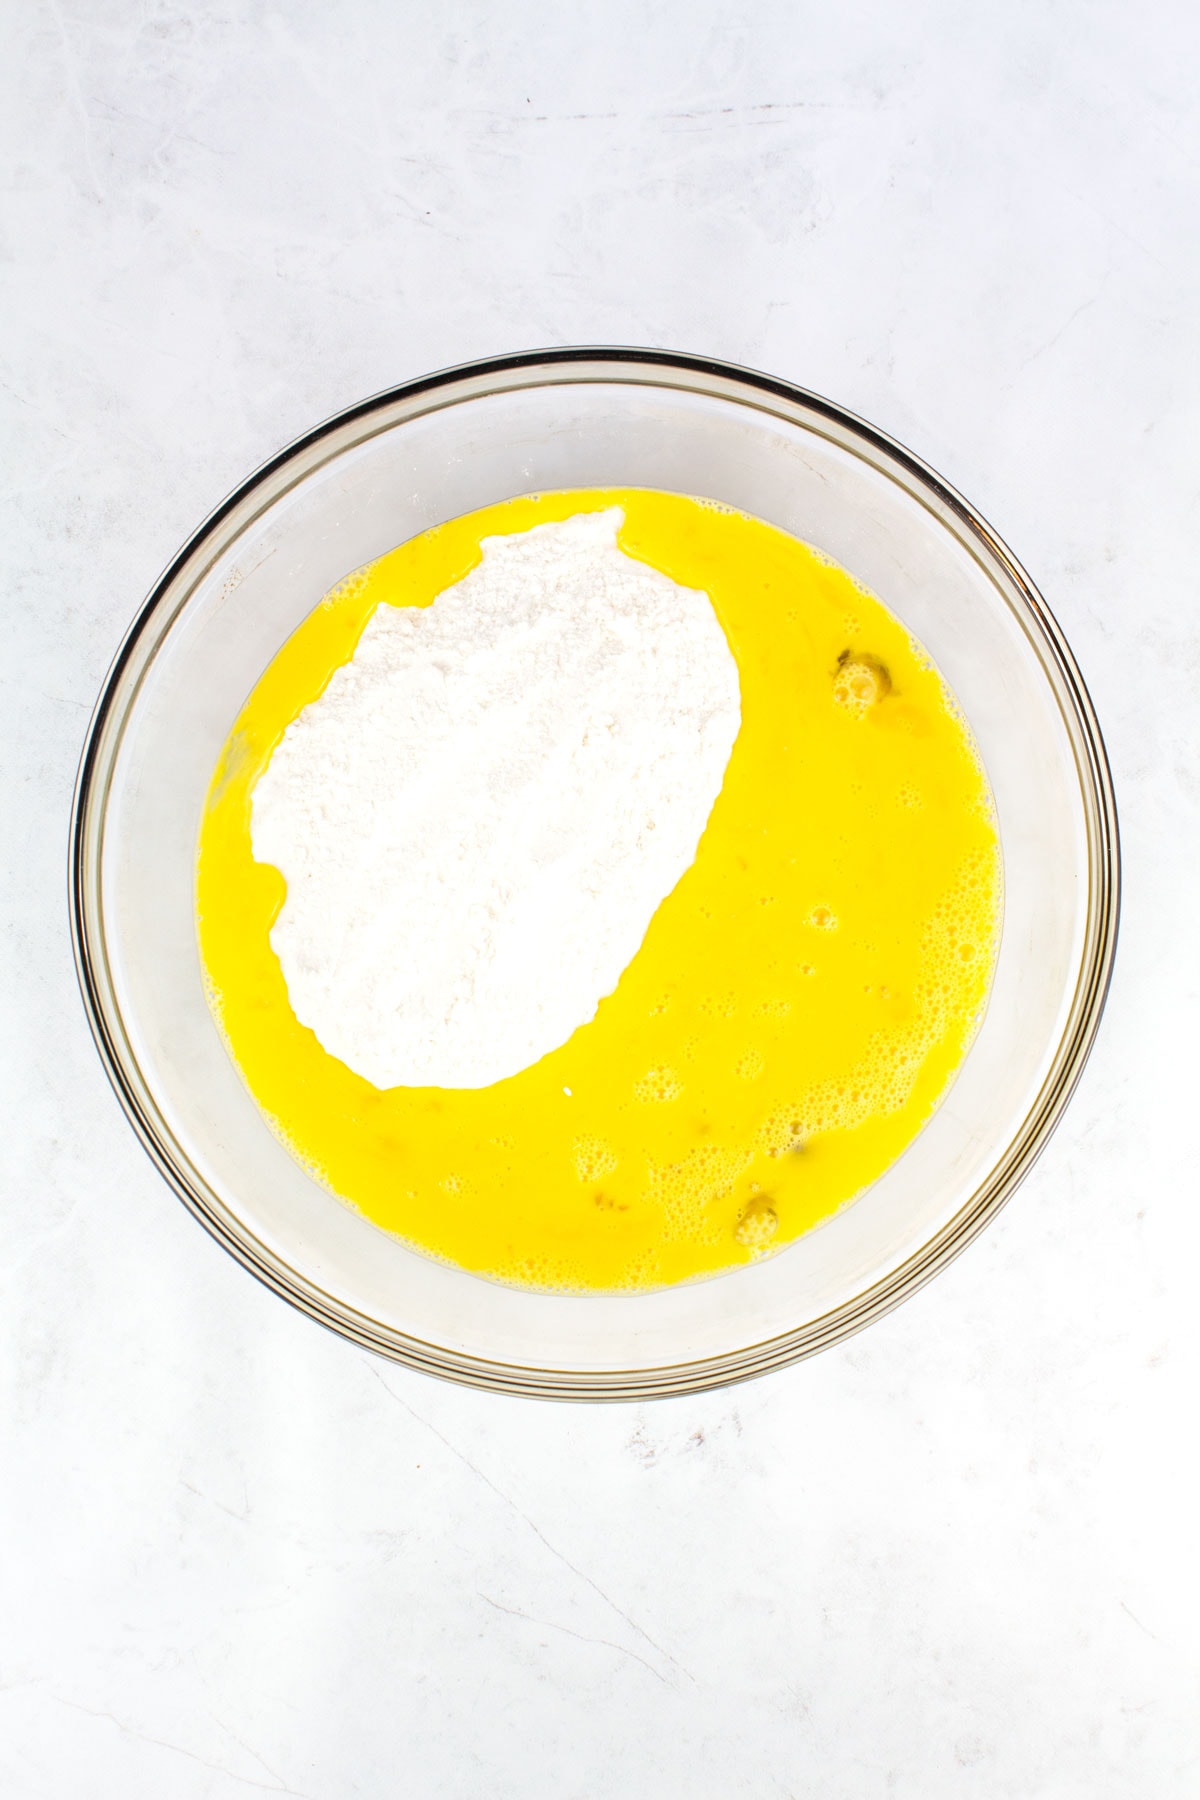 Egg yolks and flour mixed into a bowl.